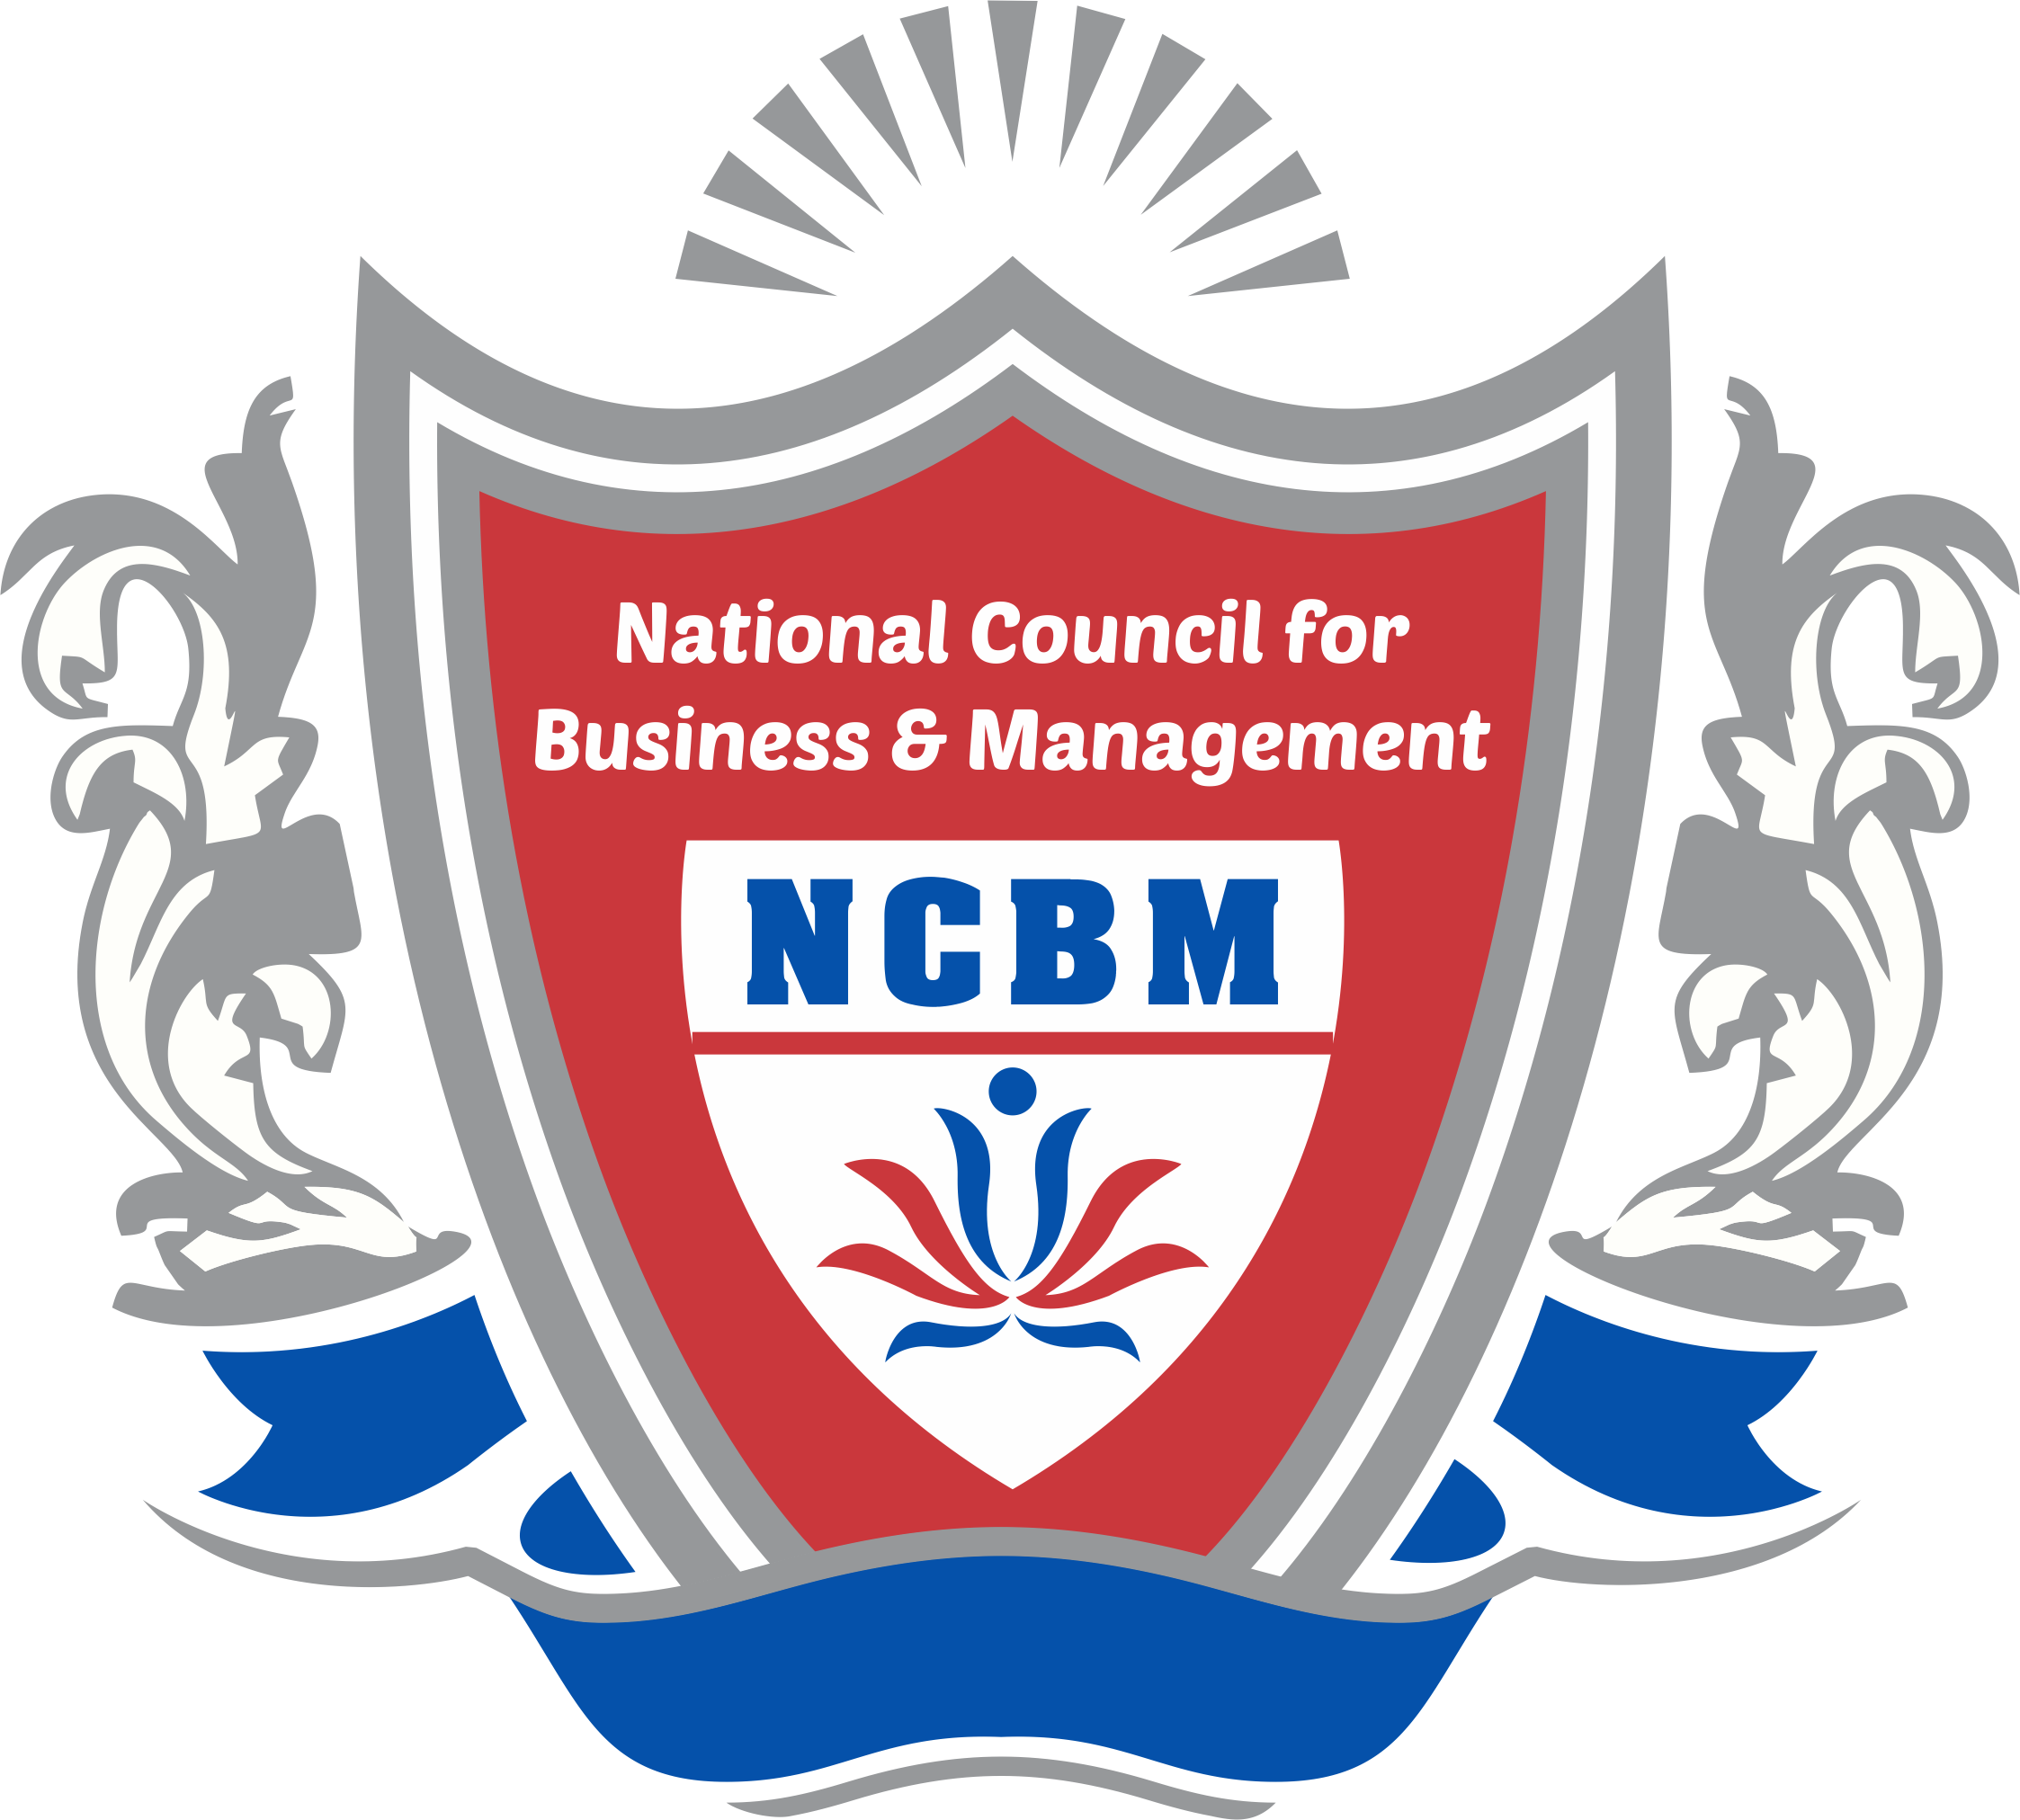 National council for business & management-NCBM